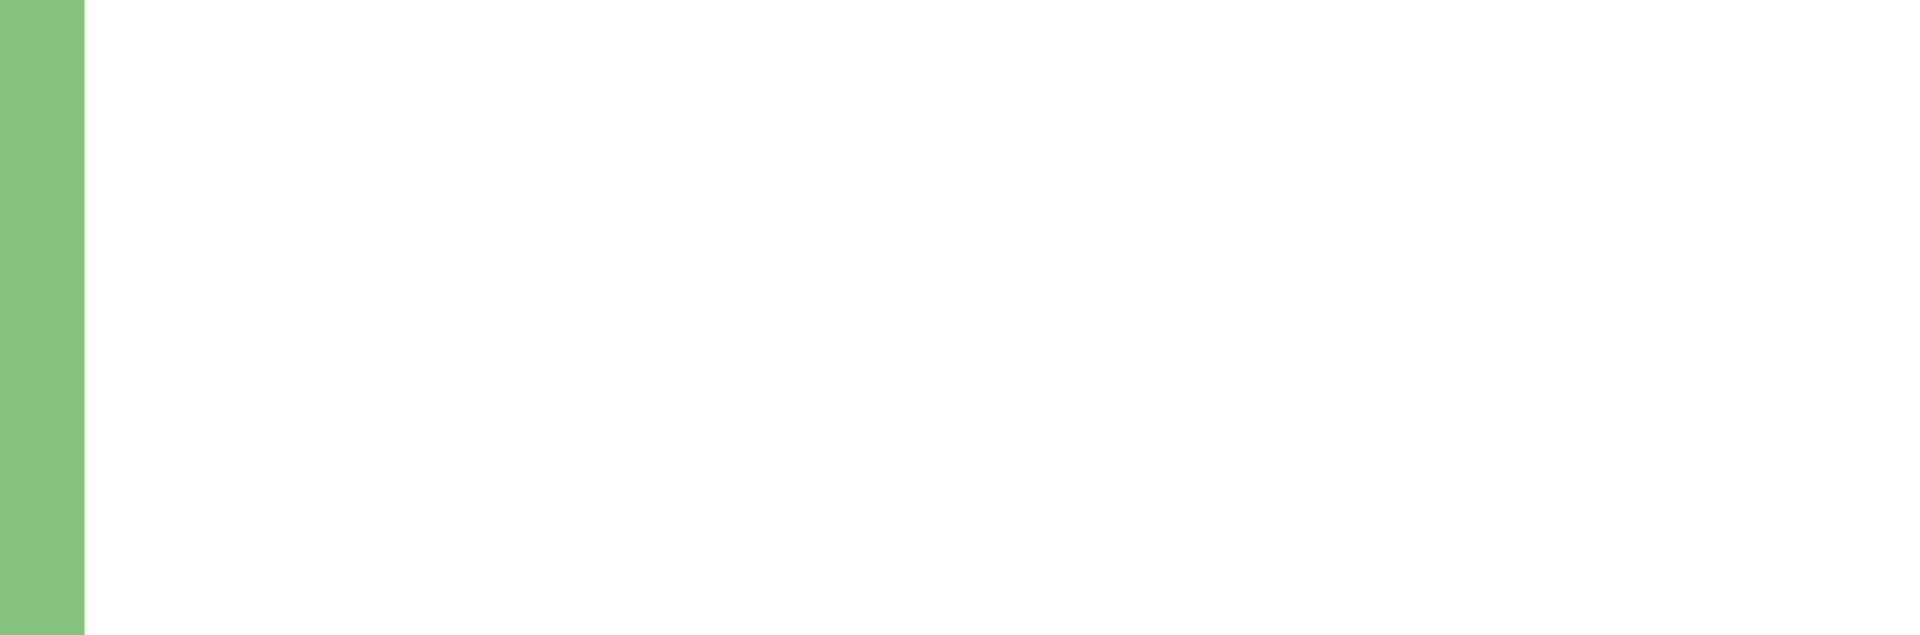 Workforce Competitiveness Trust Fund - White